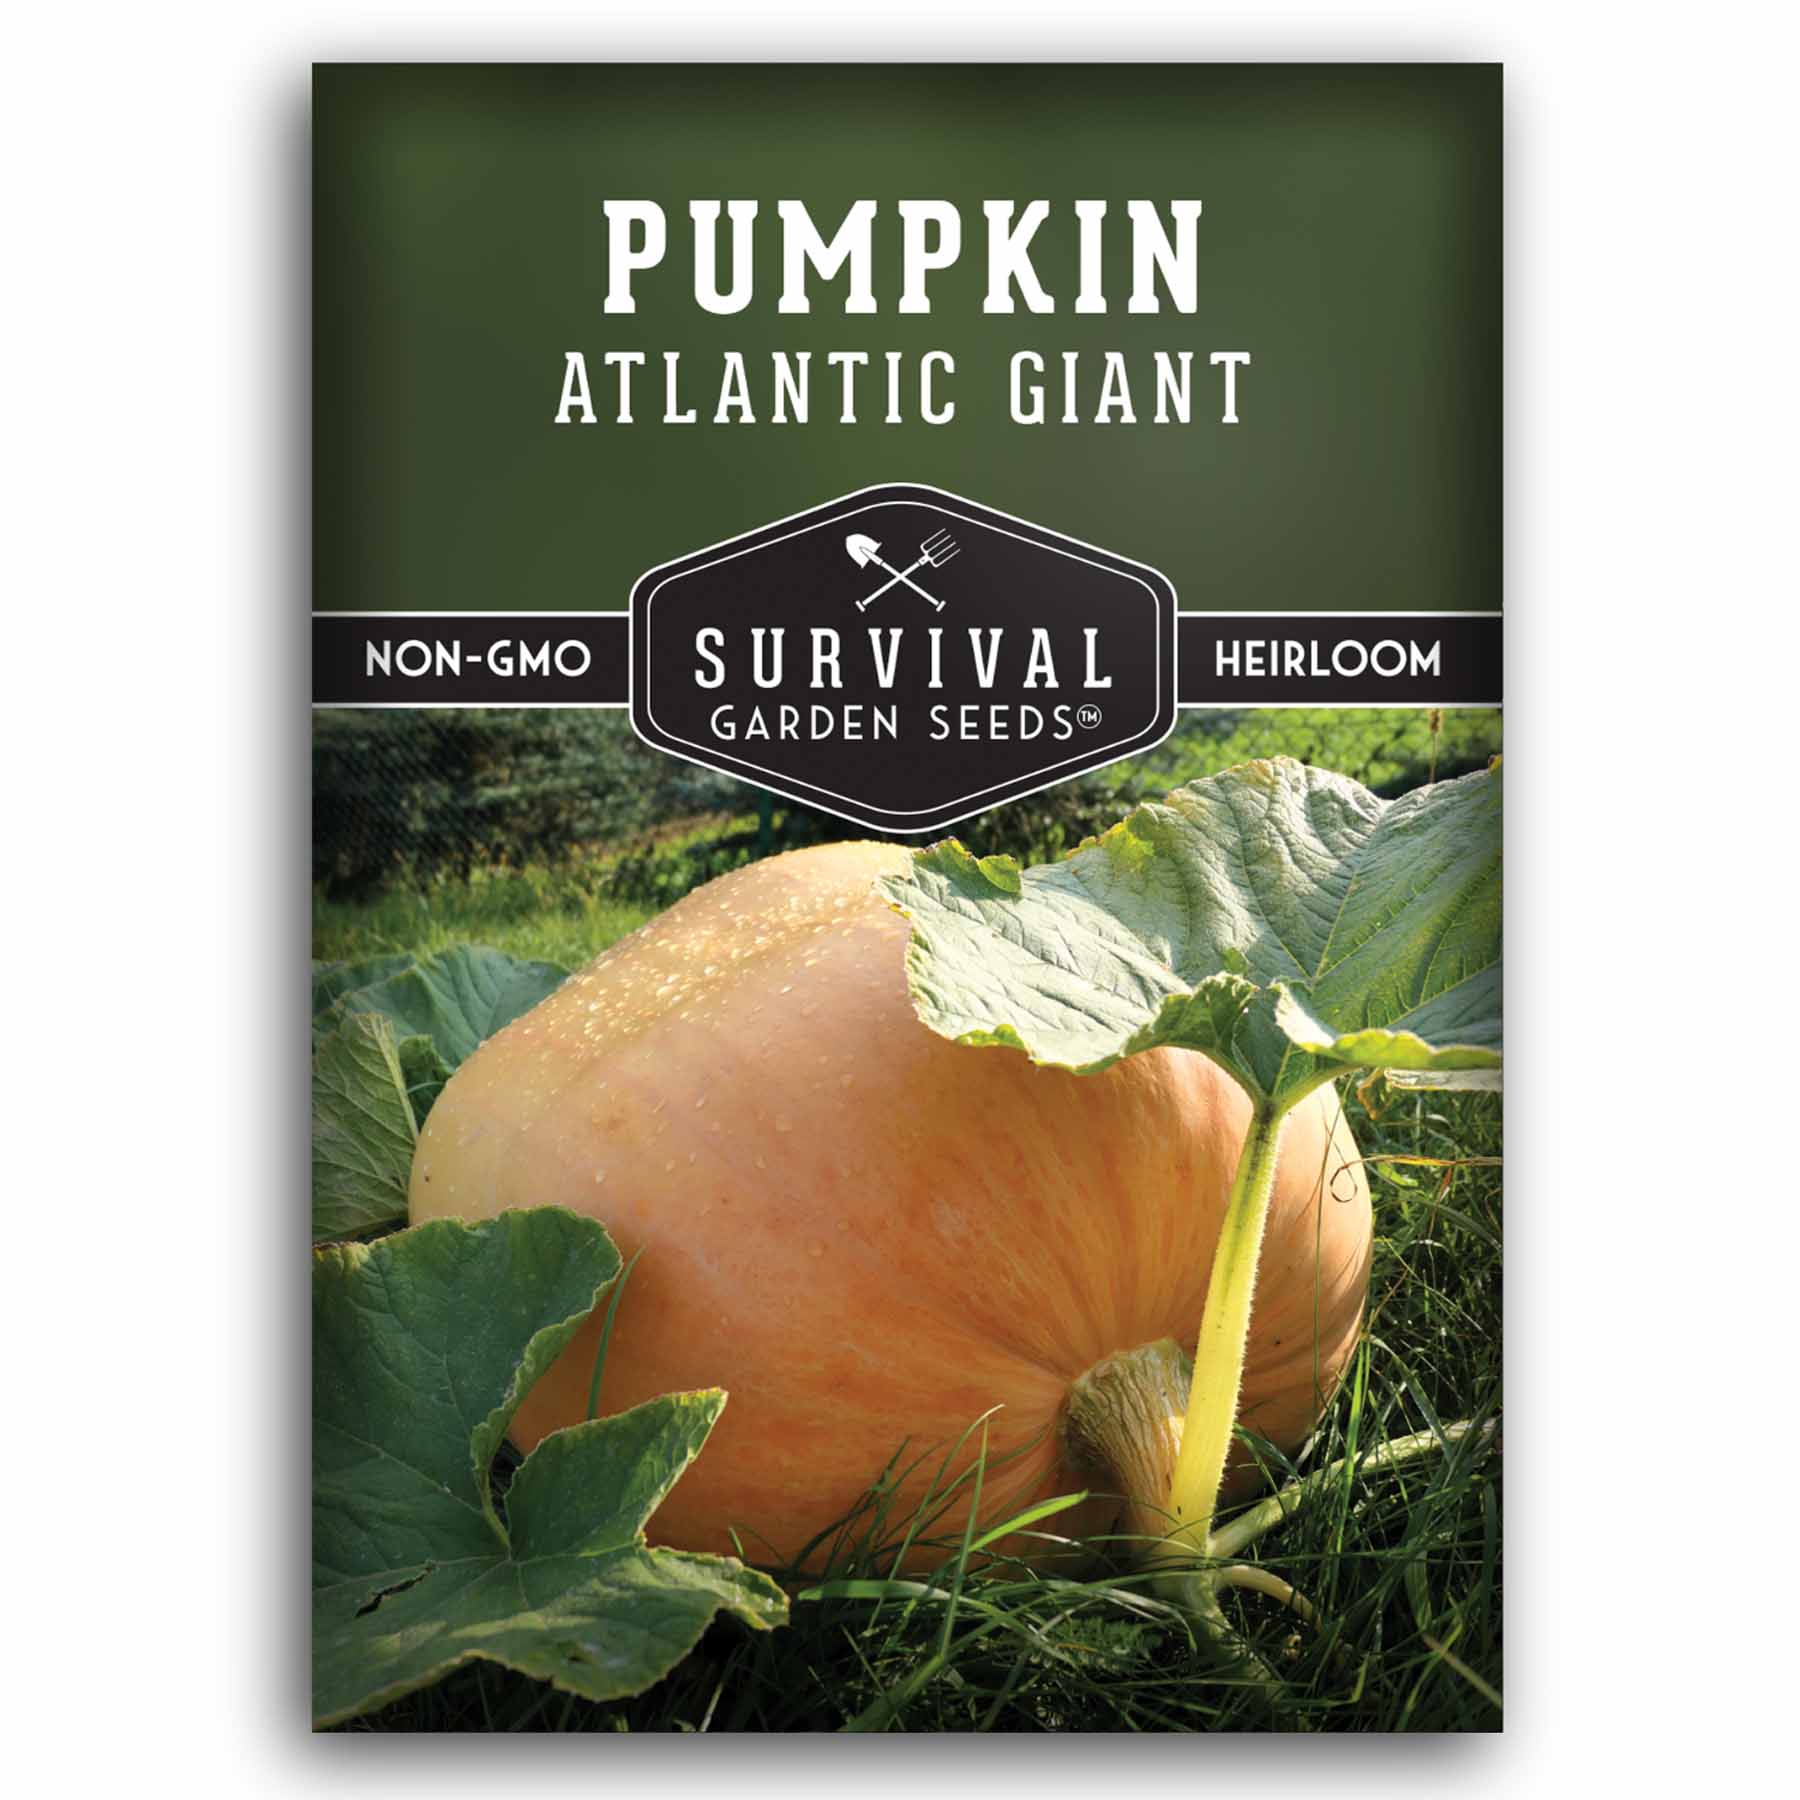 1 packet of Atlantic Giant Pumpkin seeds